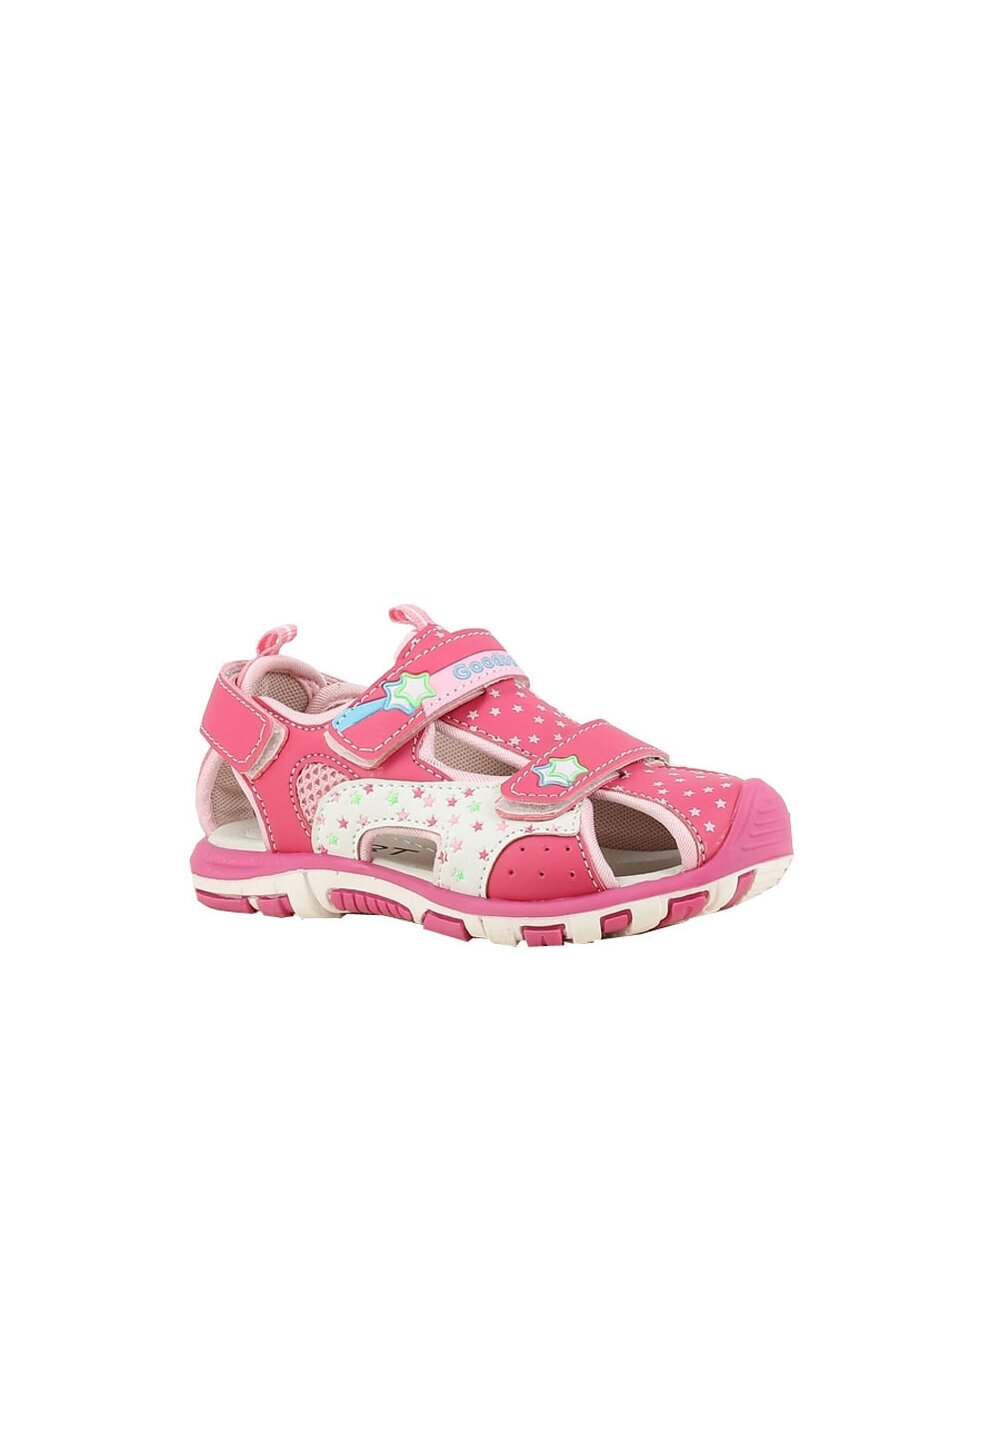 Sandale fete, cu scai din piele ecologica, roz inchis cu stele Prichindel